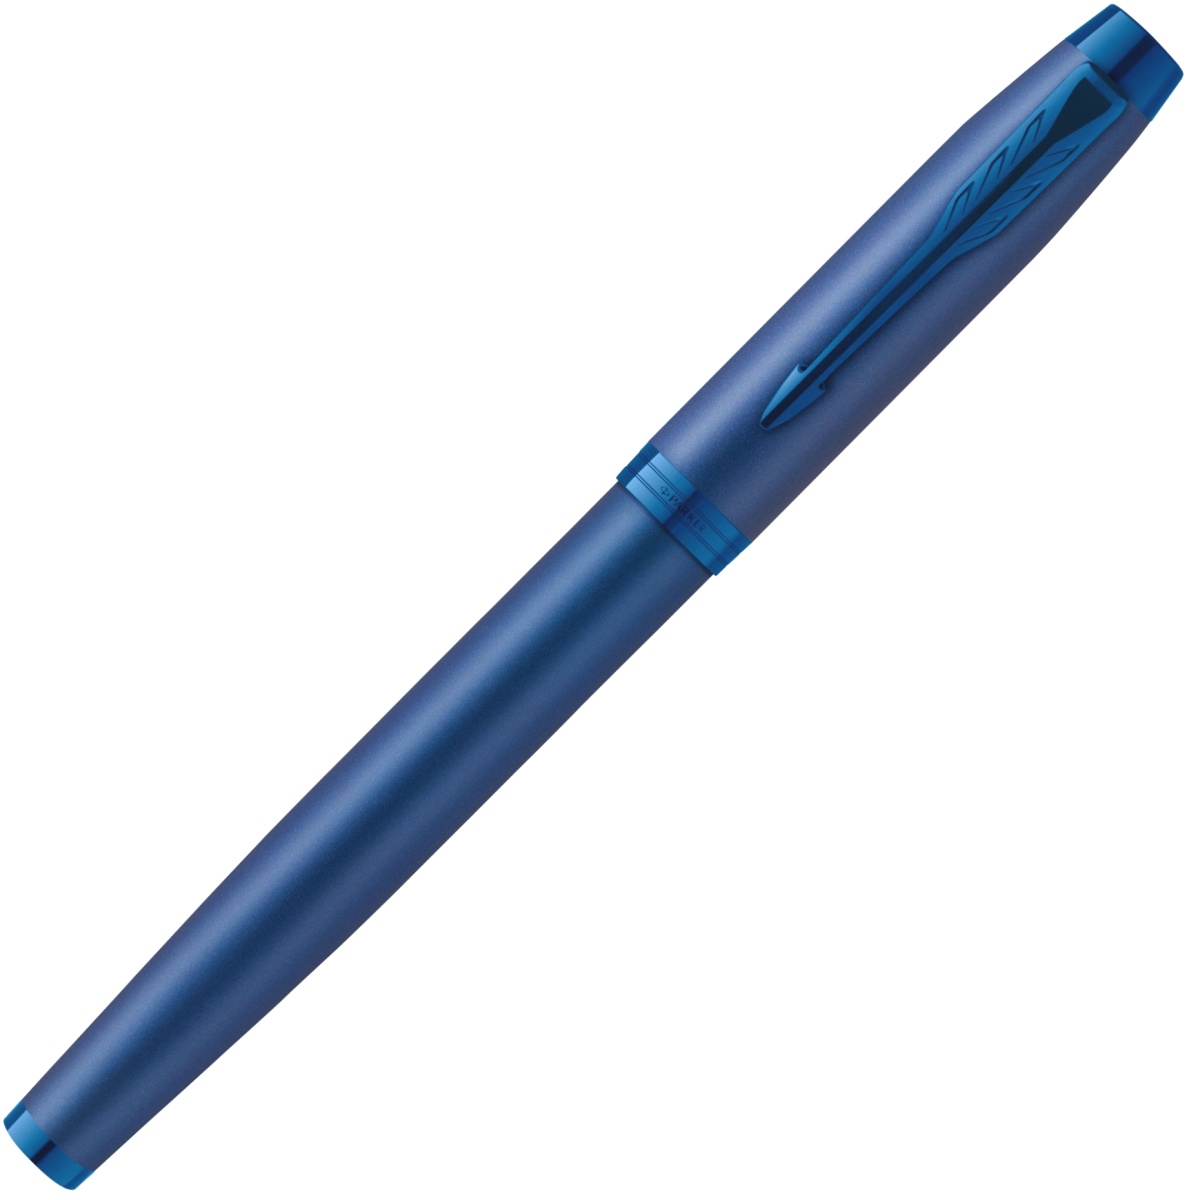  Ручка перьевая Parker IM Monochrome F328, Blue PVD (Перо M), фото 2